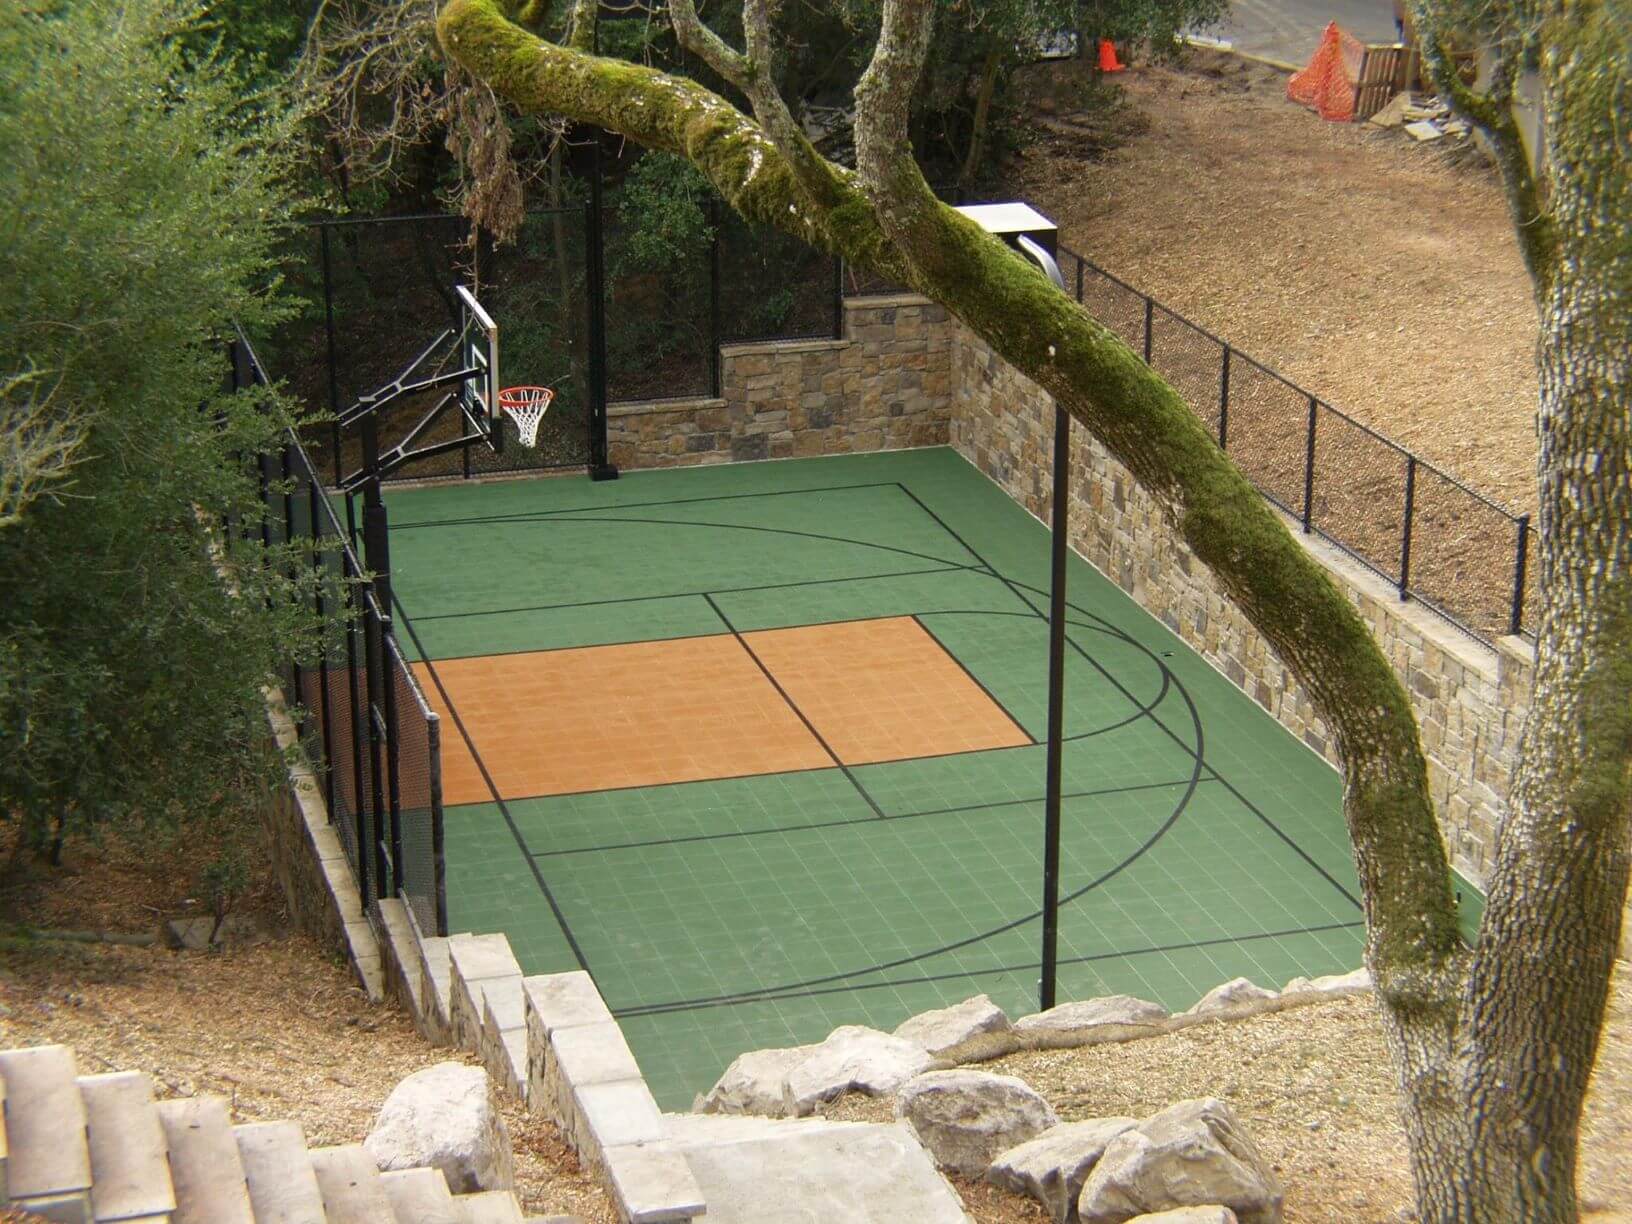 https://www.allsportamerica.com/wp-content/uploads/Backyard-Custom-Sport-Court-Multi-Court-Basketball-Tennis-Pickleball-Court-Builder-Retaining-Wall-Landscape-Backyard-Design-1.jpg